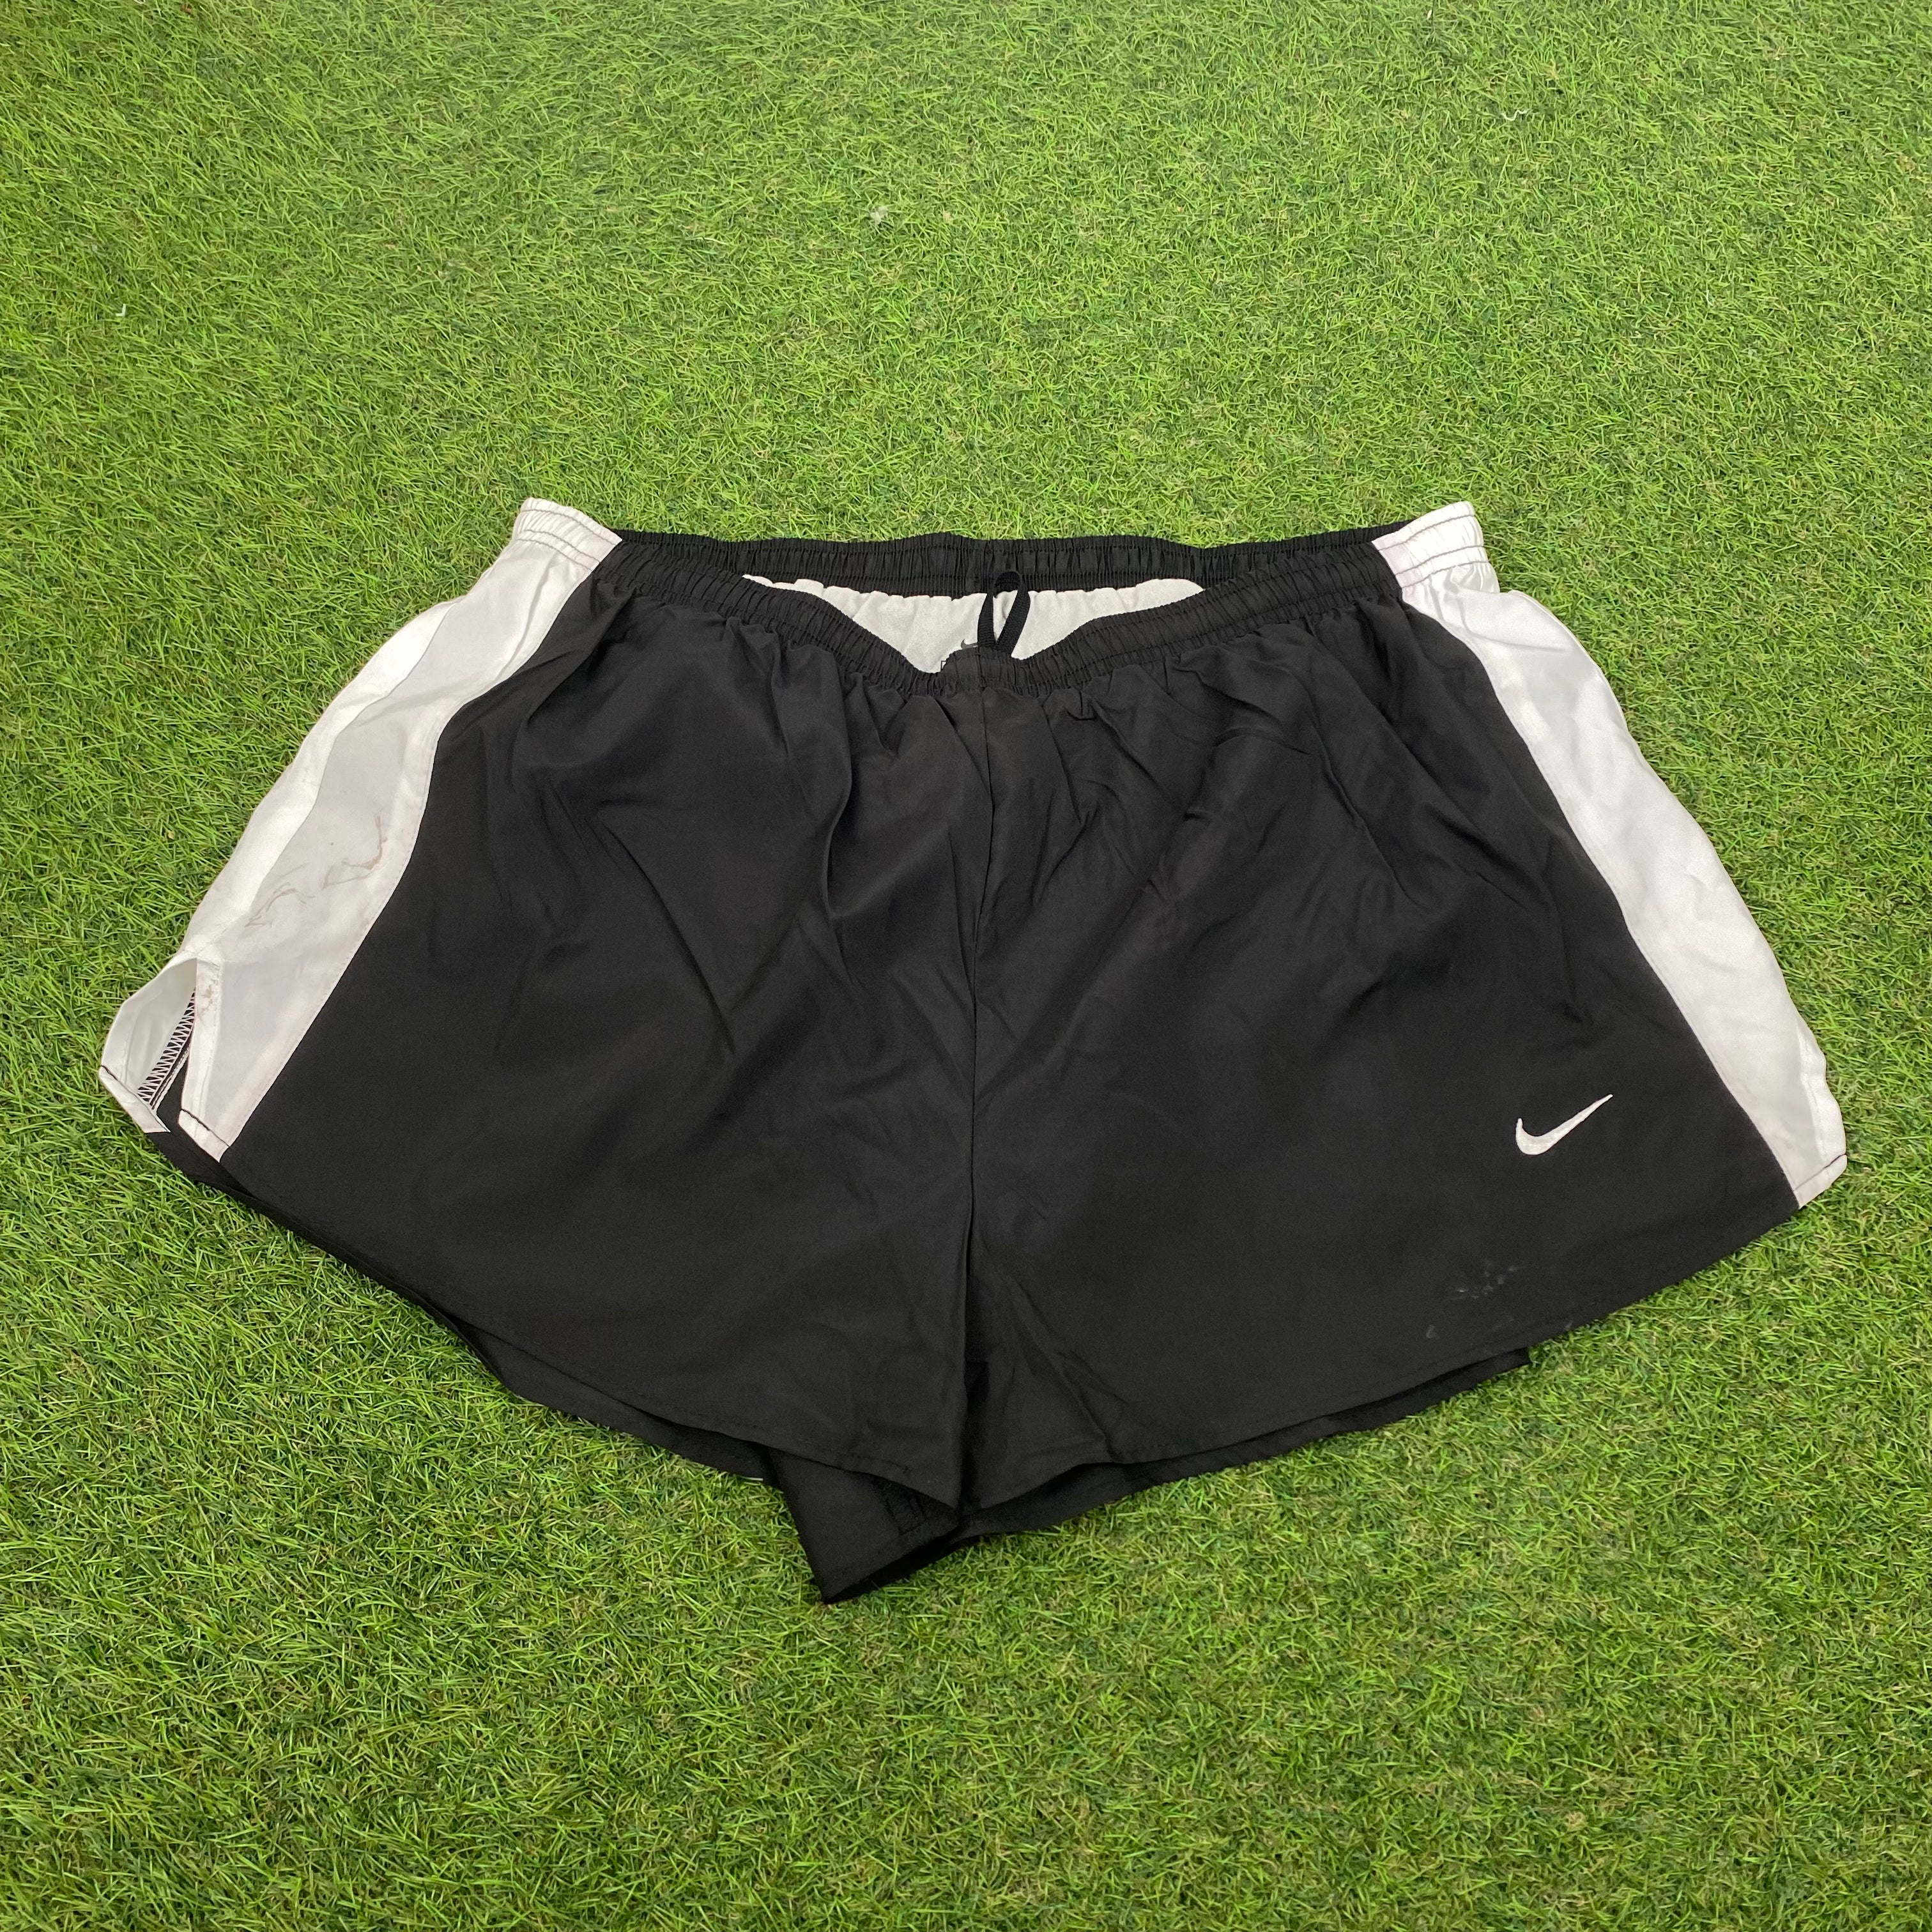 00s Nike Nylon Sprinter Shorts Black XL